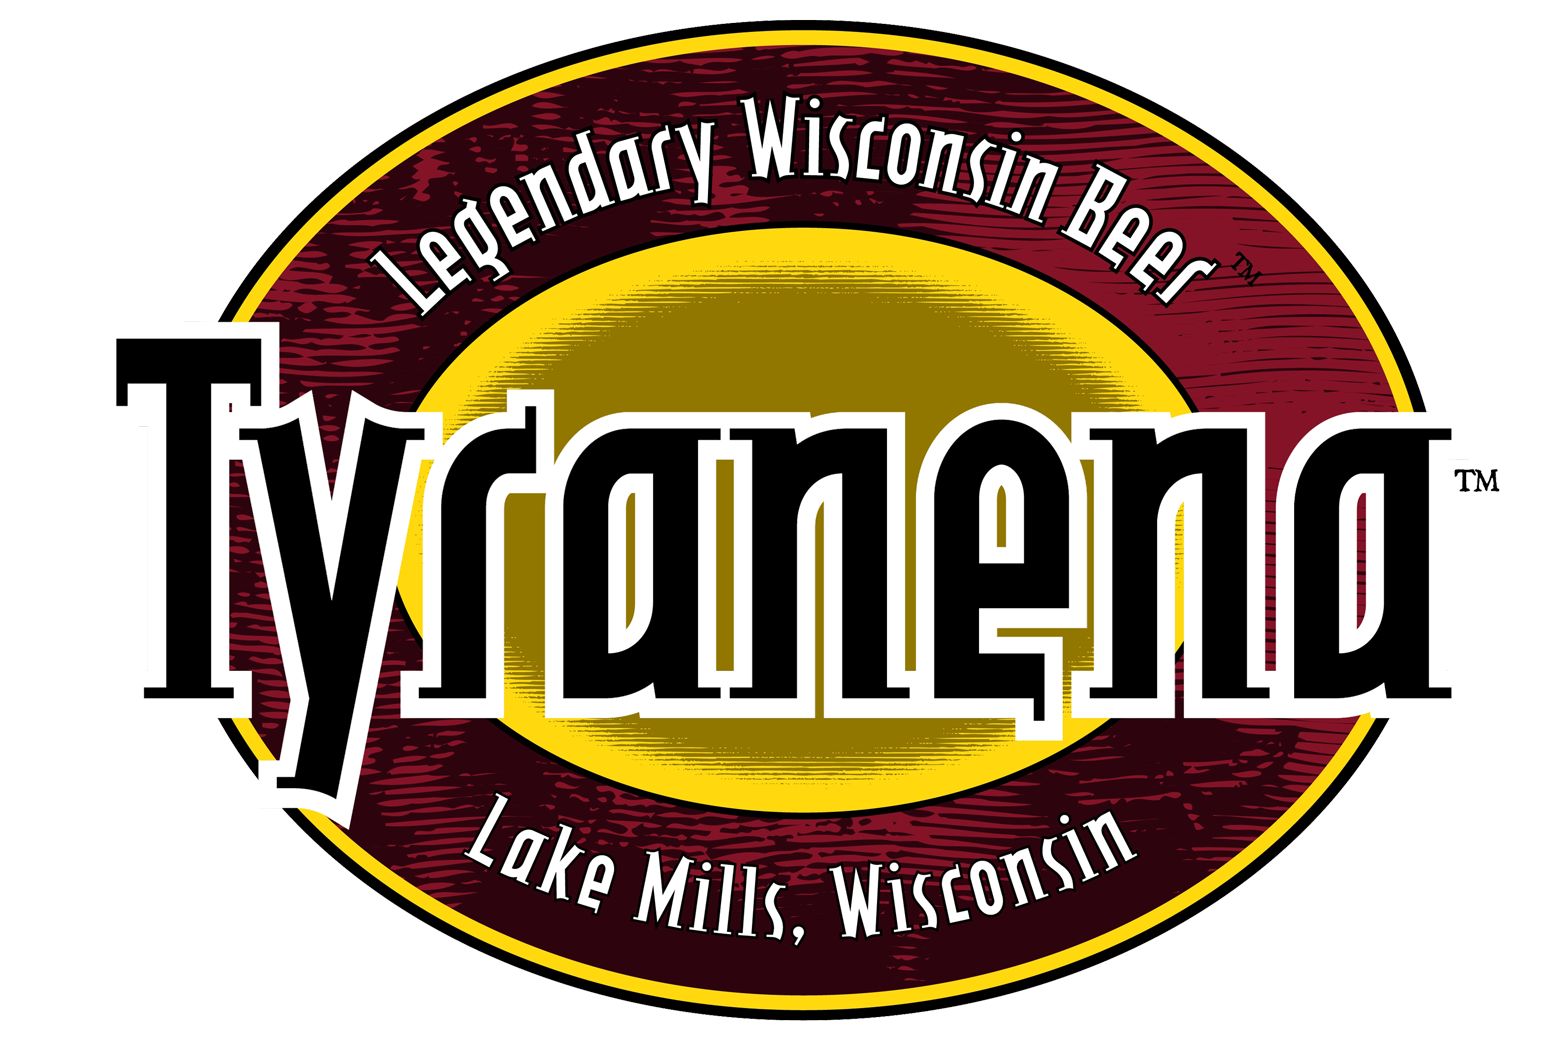 Logo of Tyranena Brewing brewery